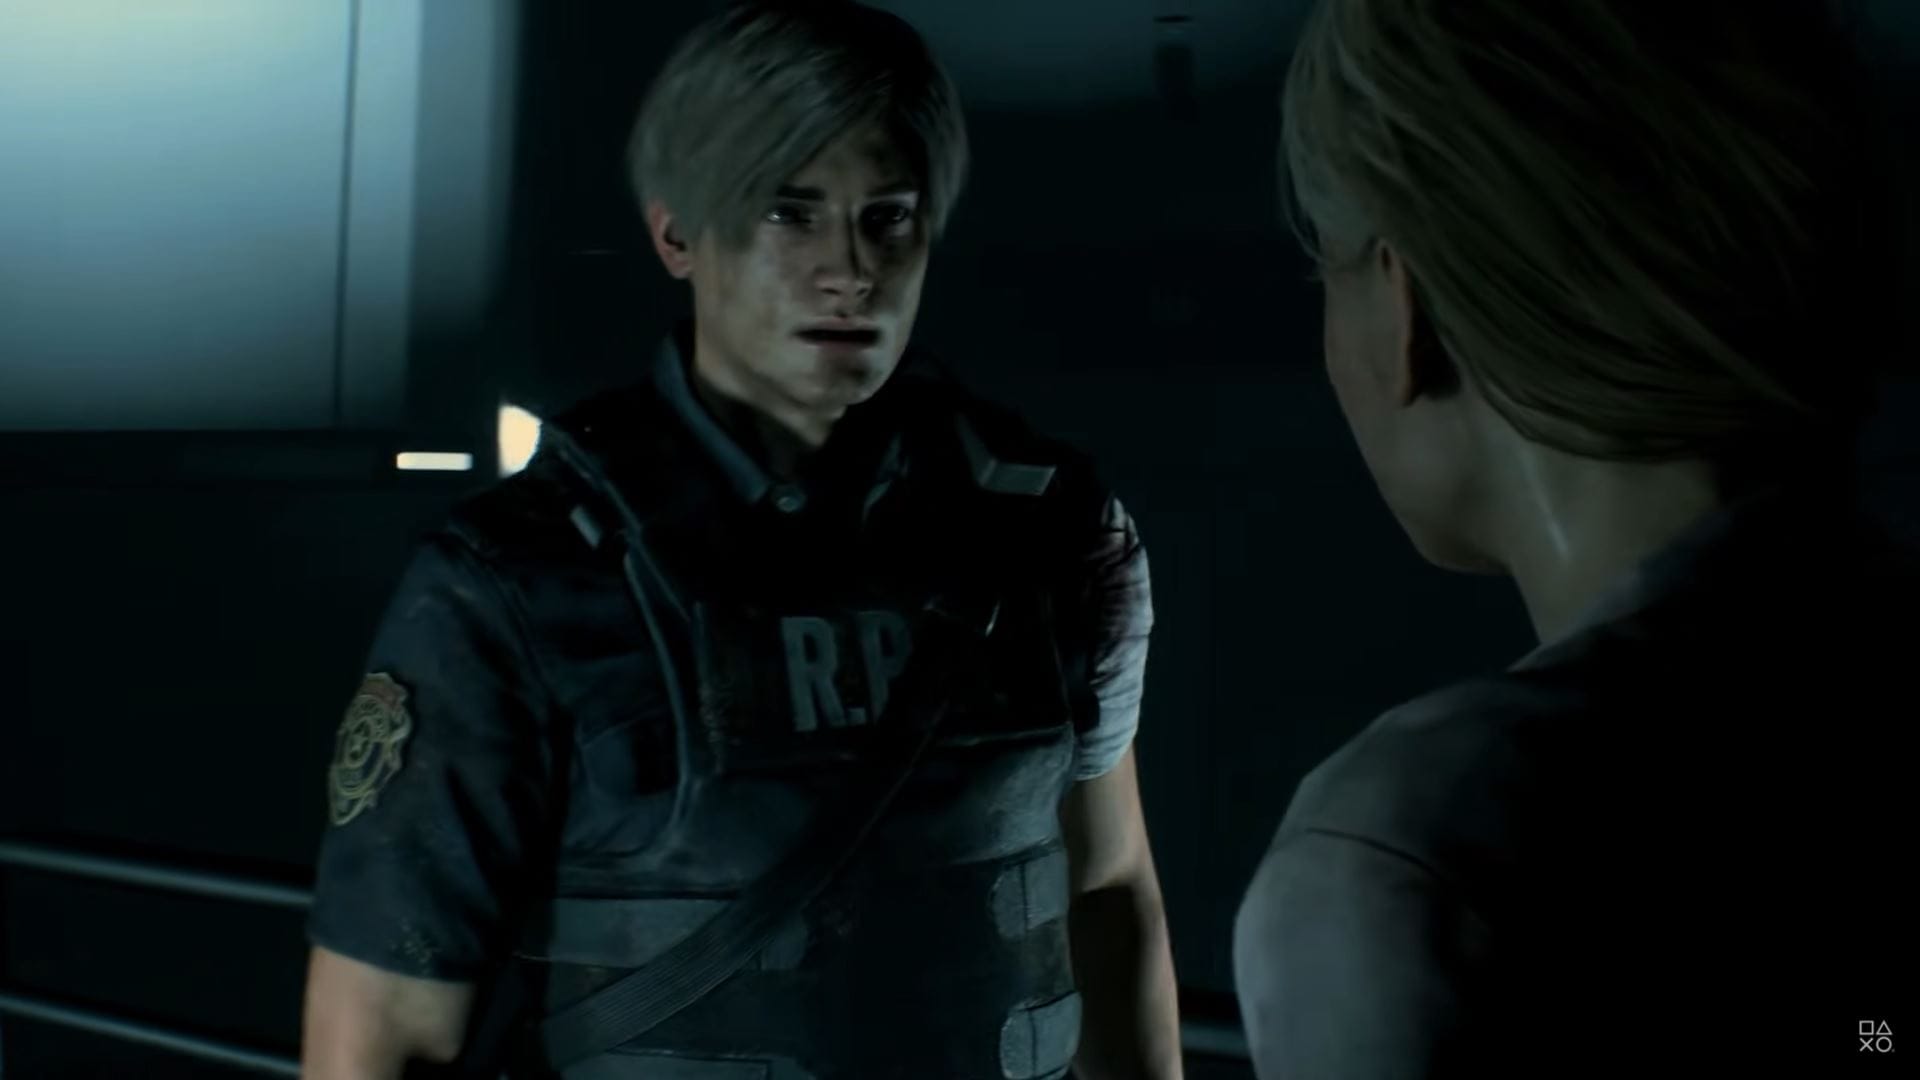 The Resident Evil 2 Remake (GameCube Version)